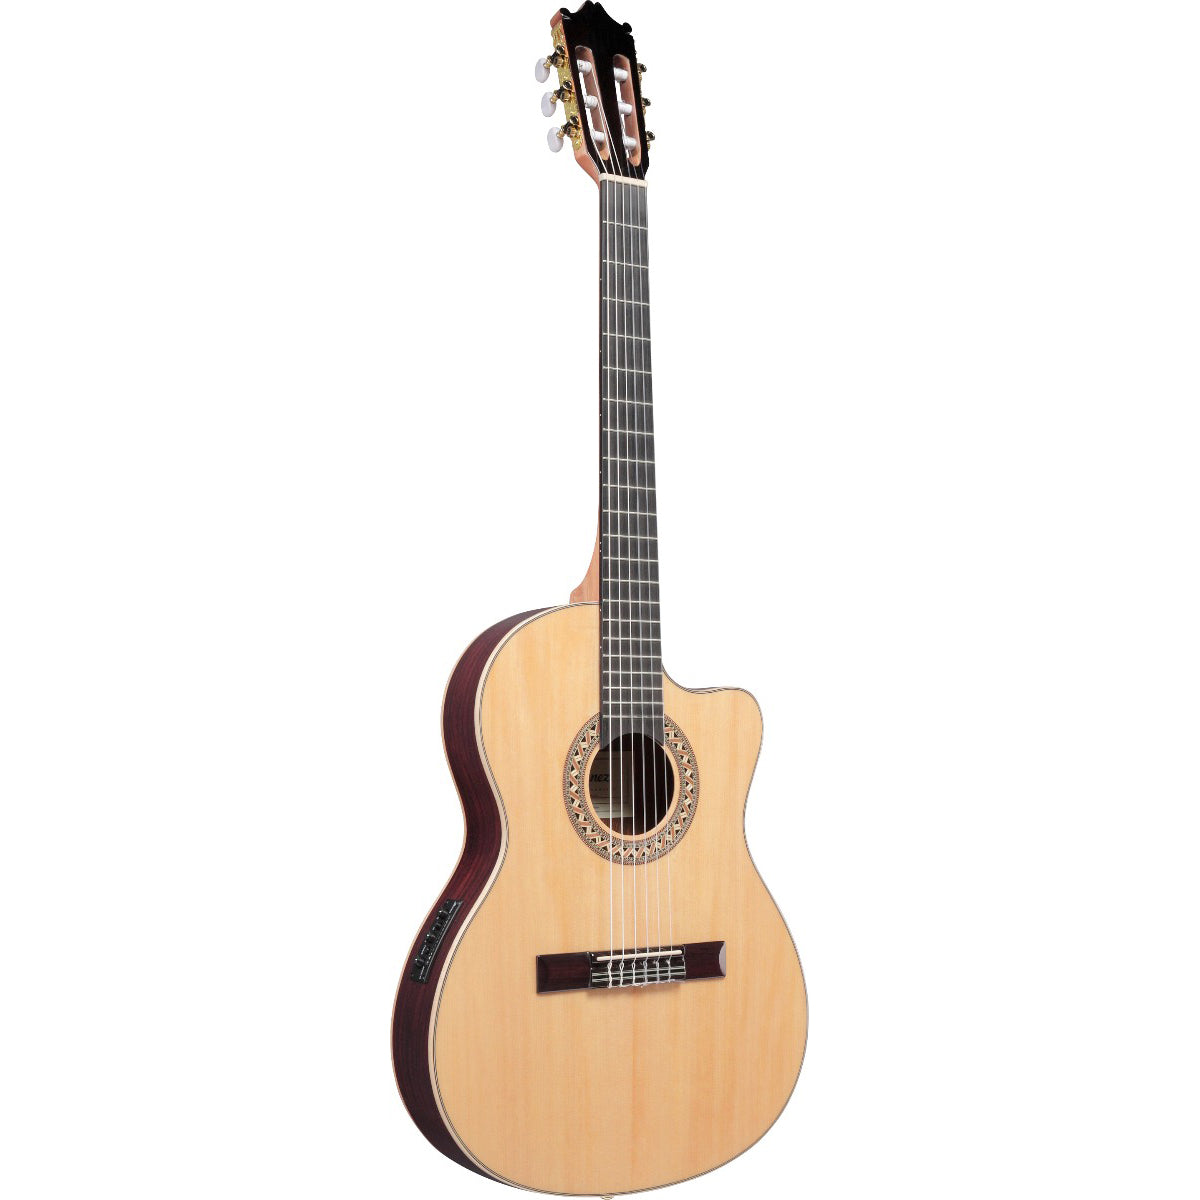 Ibanez GA34STCENT GA Series Acoustic Electric Classical Guitar in Natural